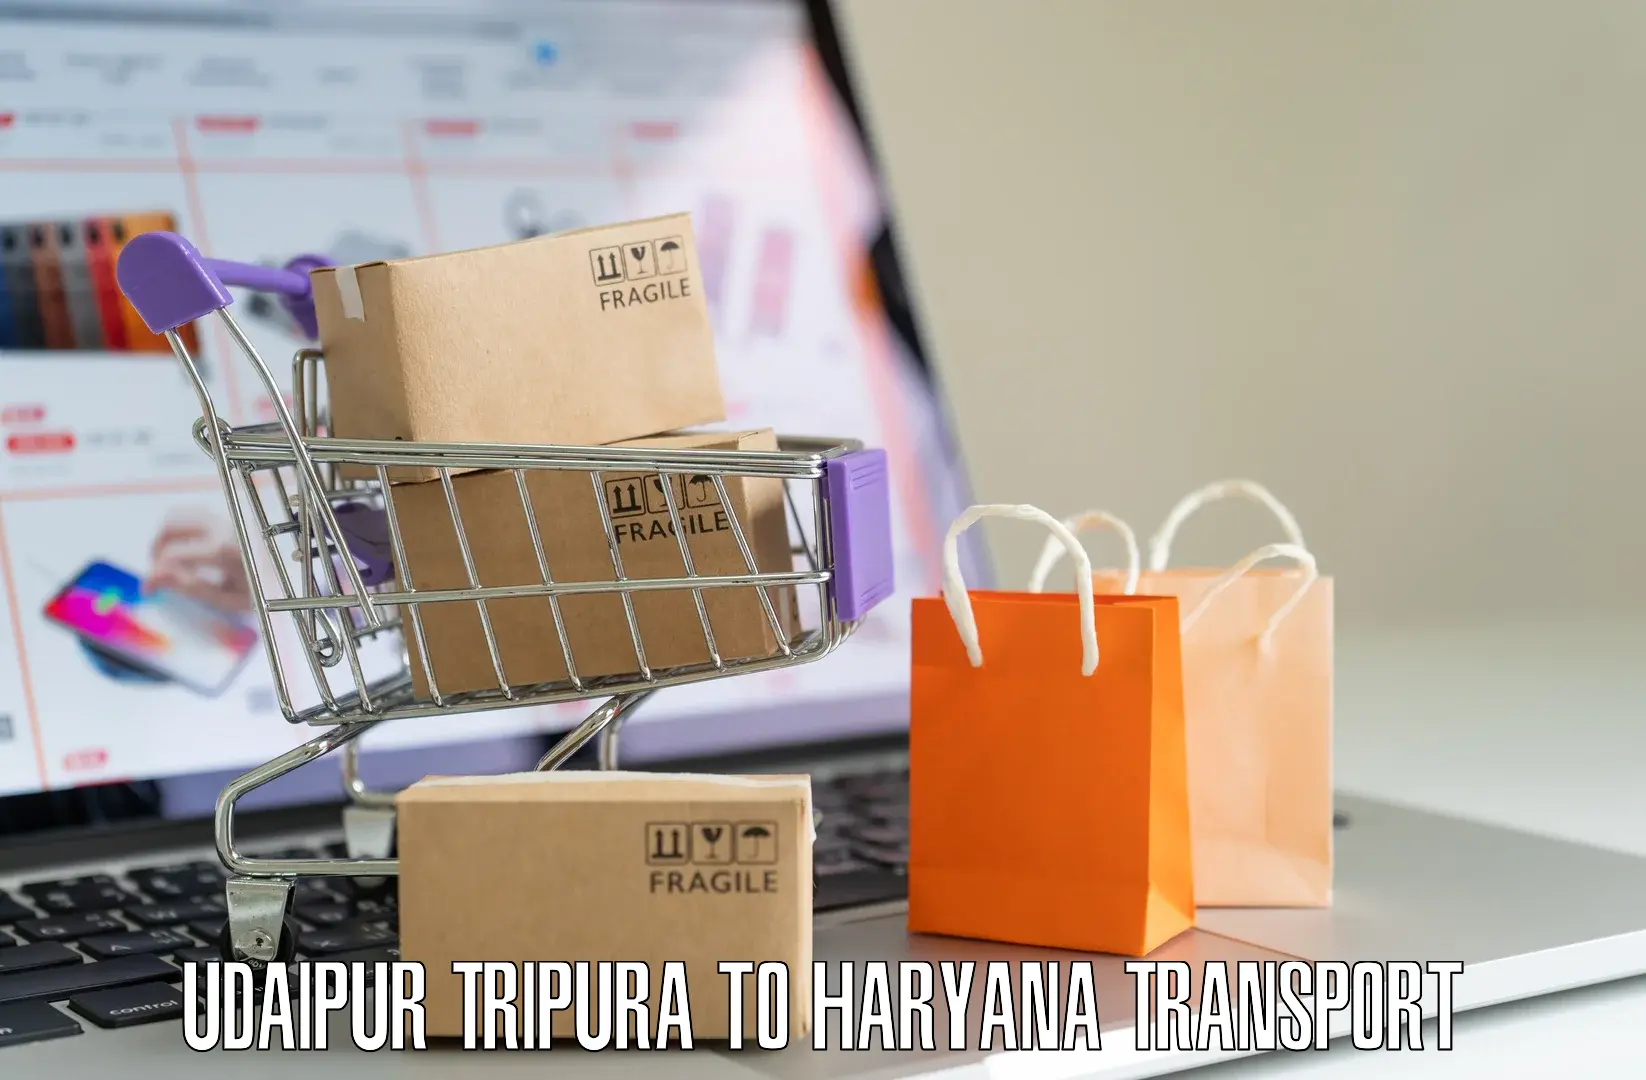 Furniture transport service Udaipur Tripura to Yamuna Nagar